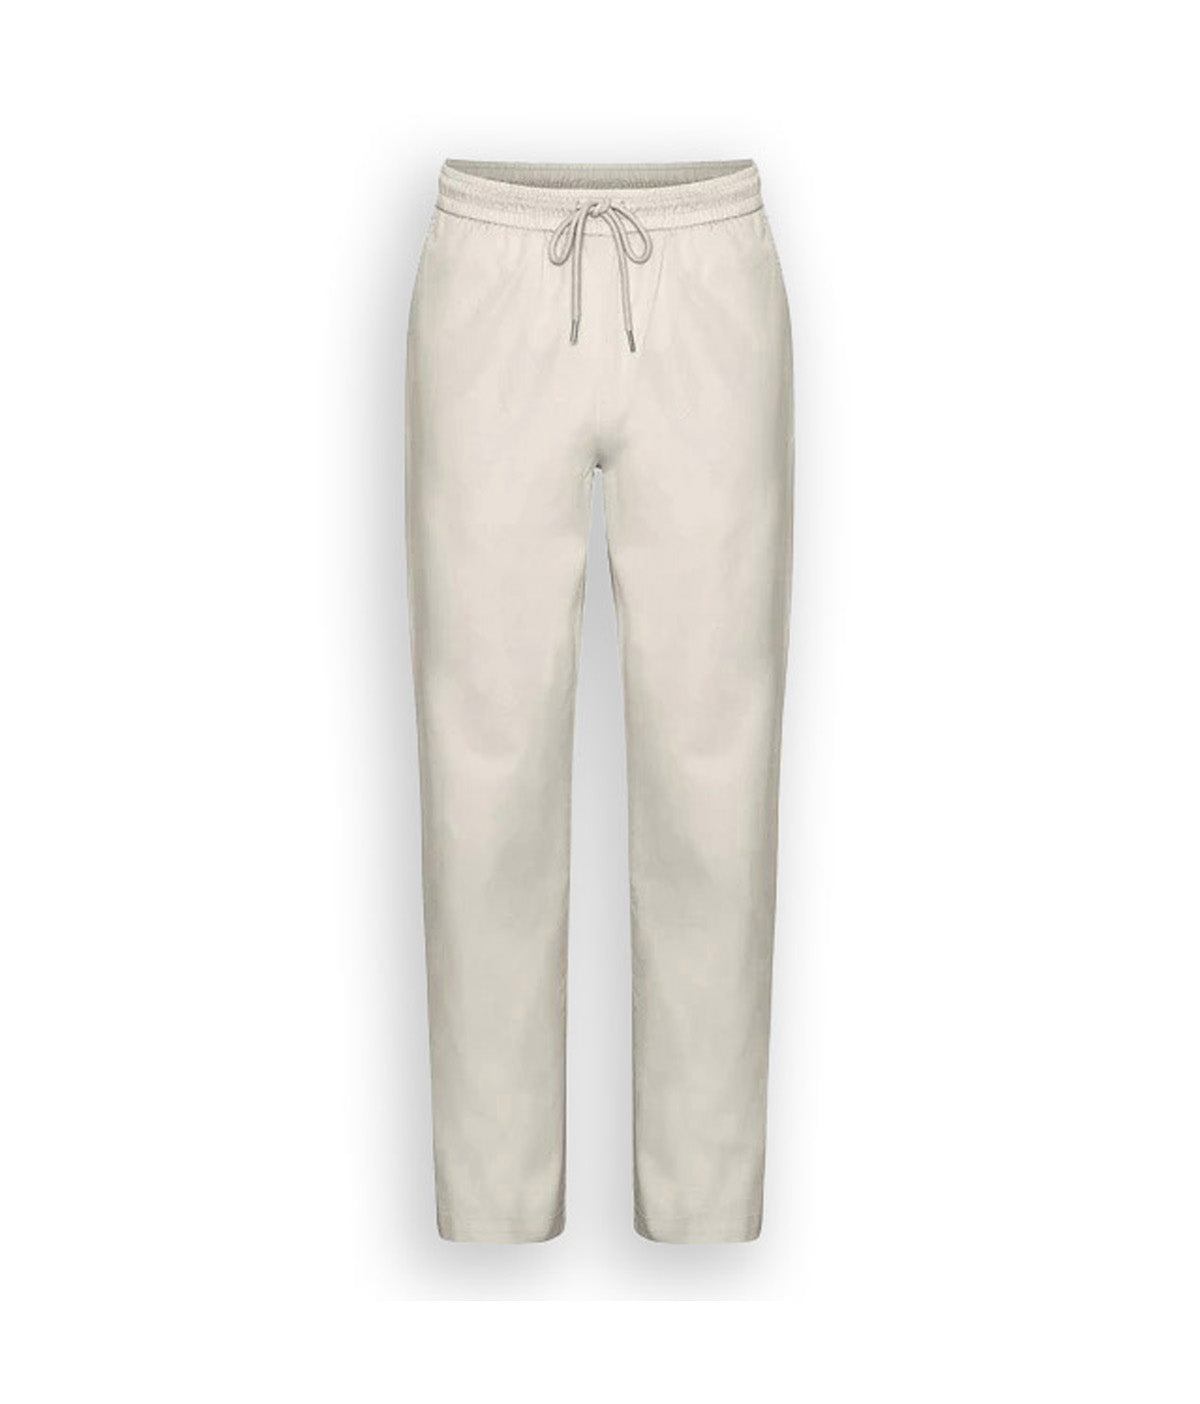 Pantaloni Colorful Standard Cotone Organico Elastico Bianco Sporco Unisex